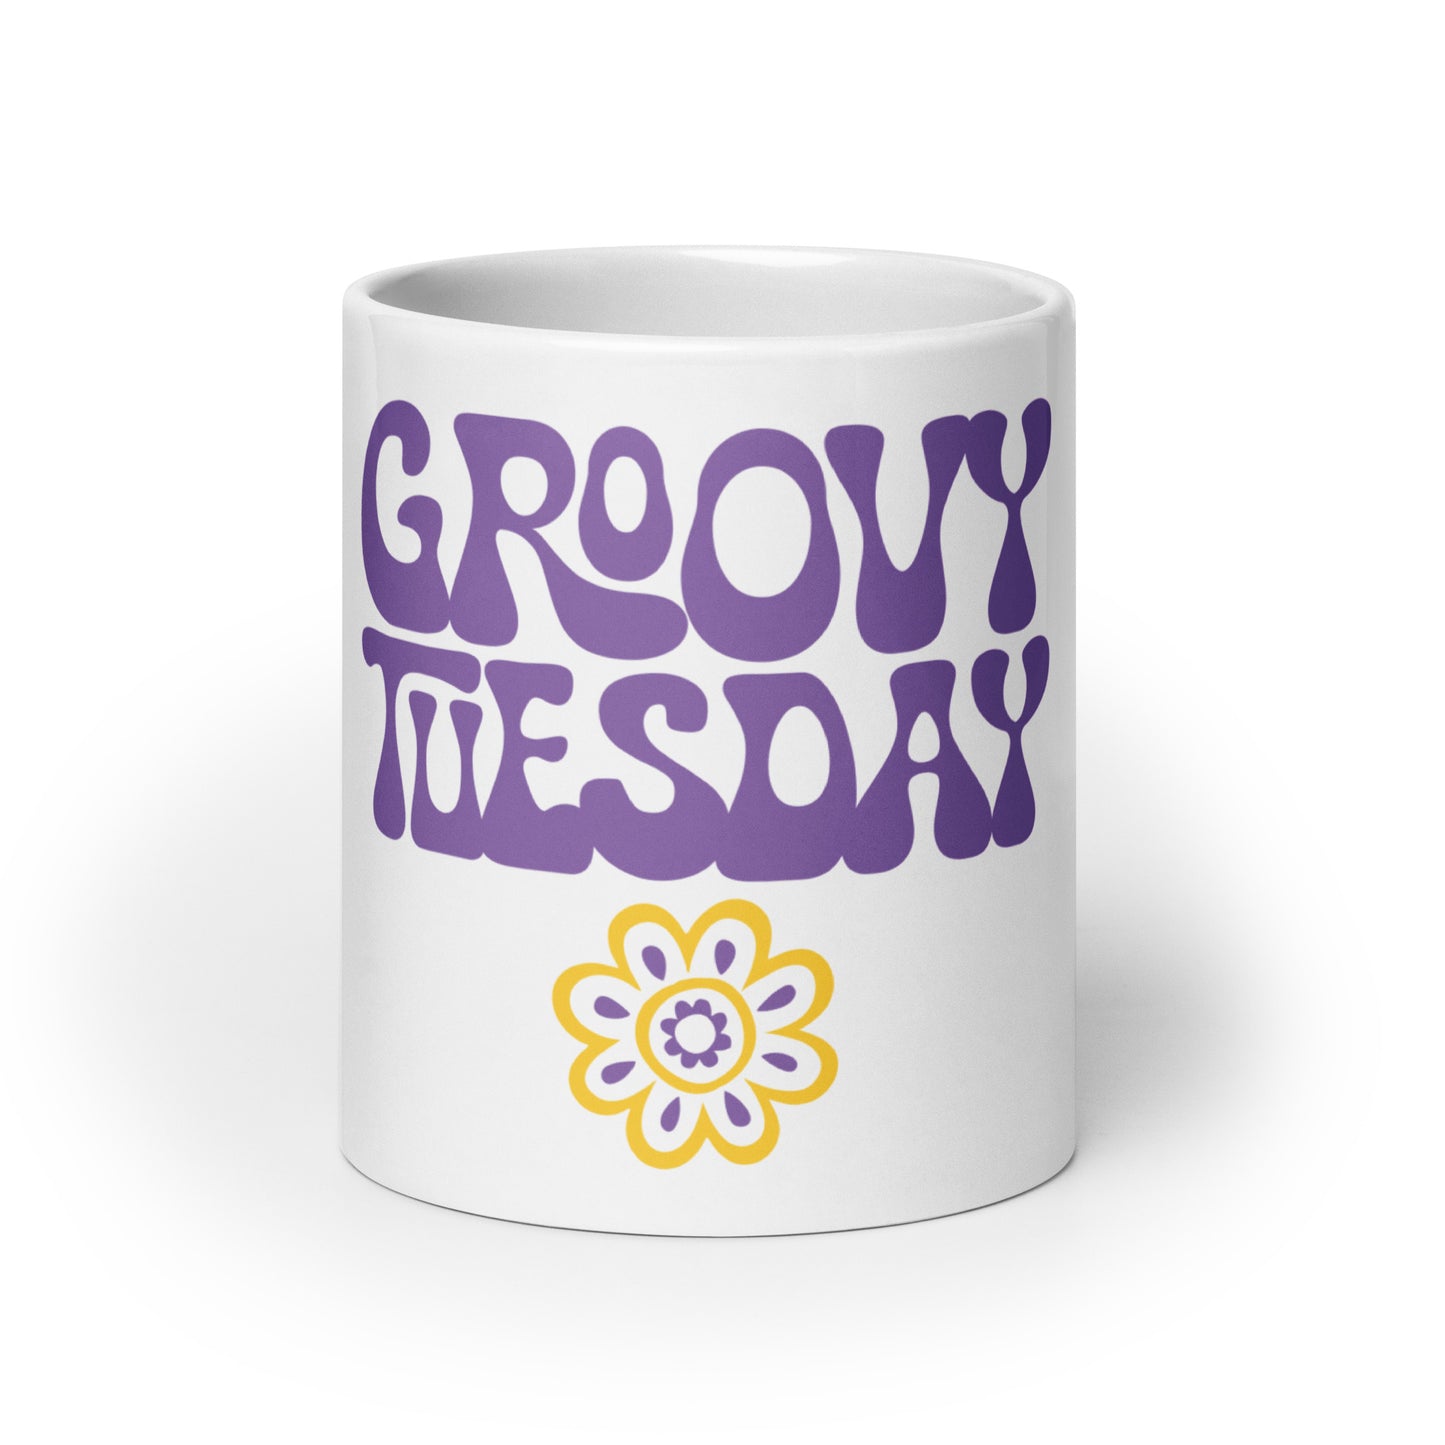 Groovy Tuesday White Coffee Mug